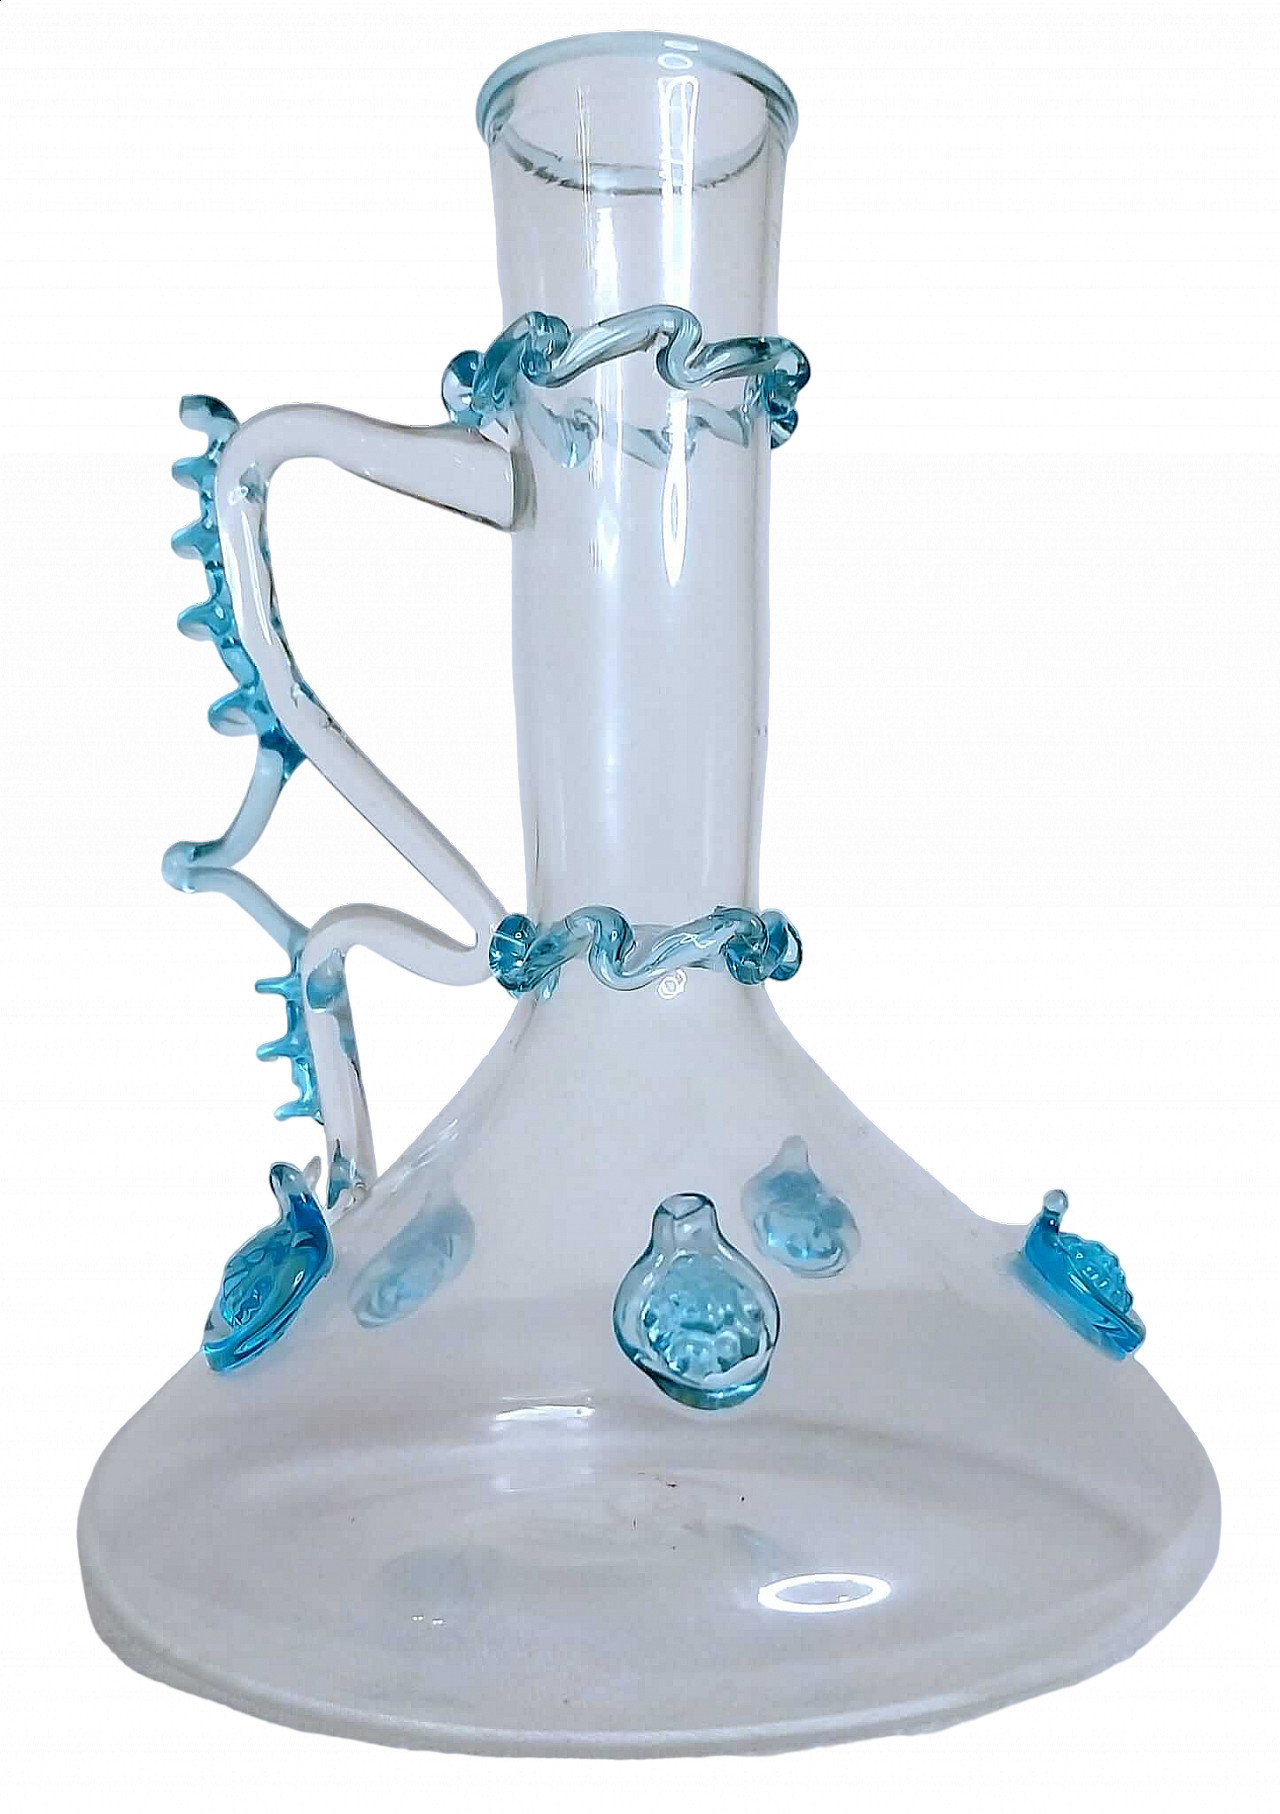 14 Glass Brass Vase - World Art Glass Decor - Murano Glass Gifts Co.